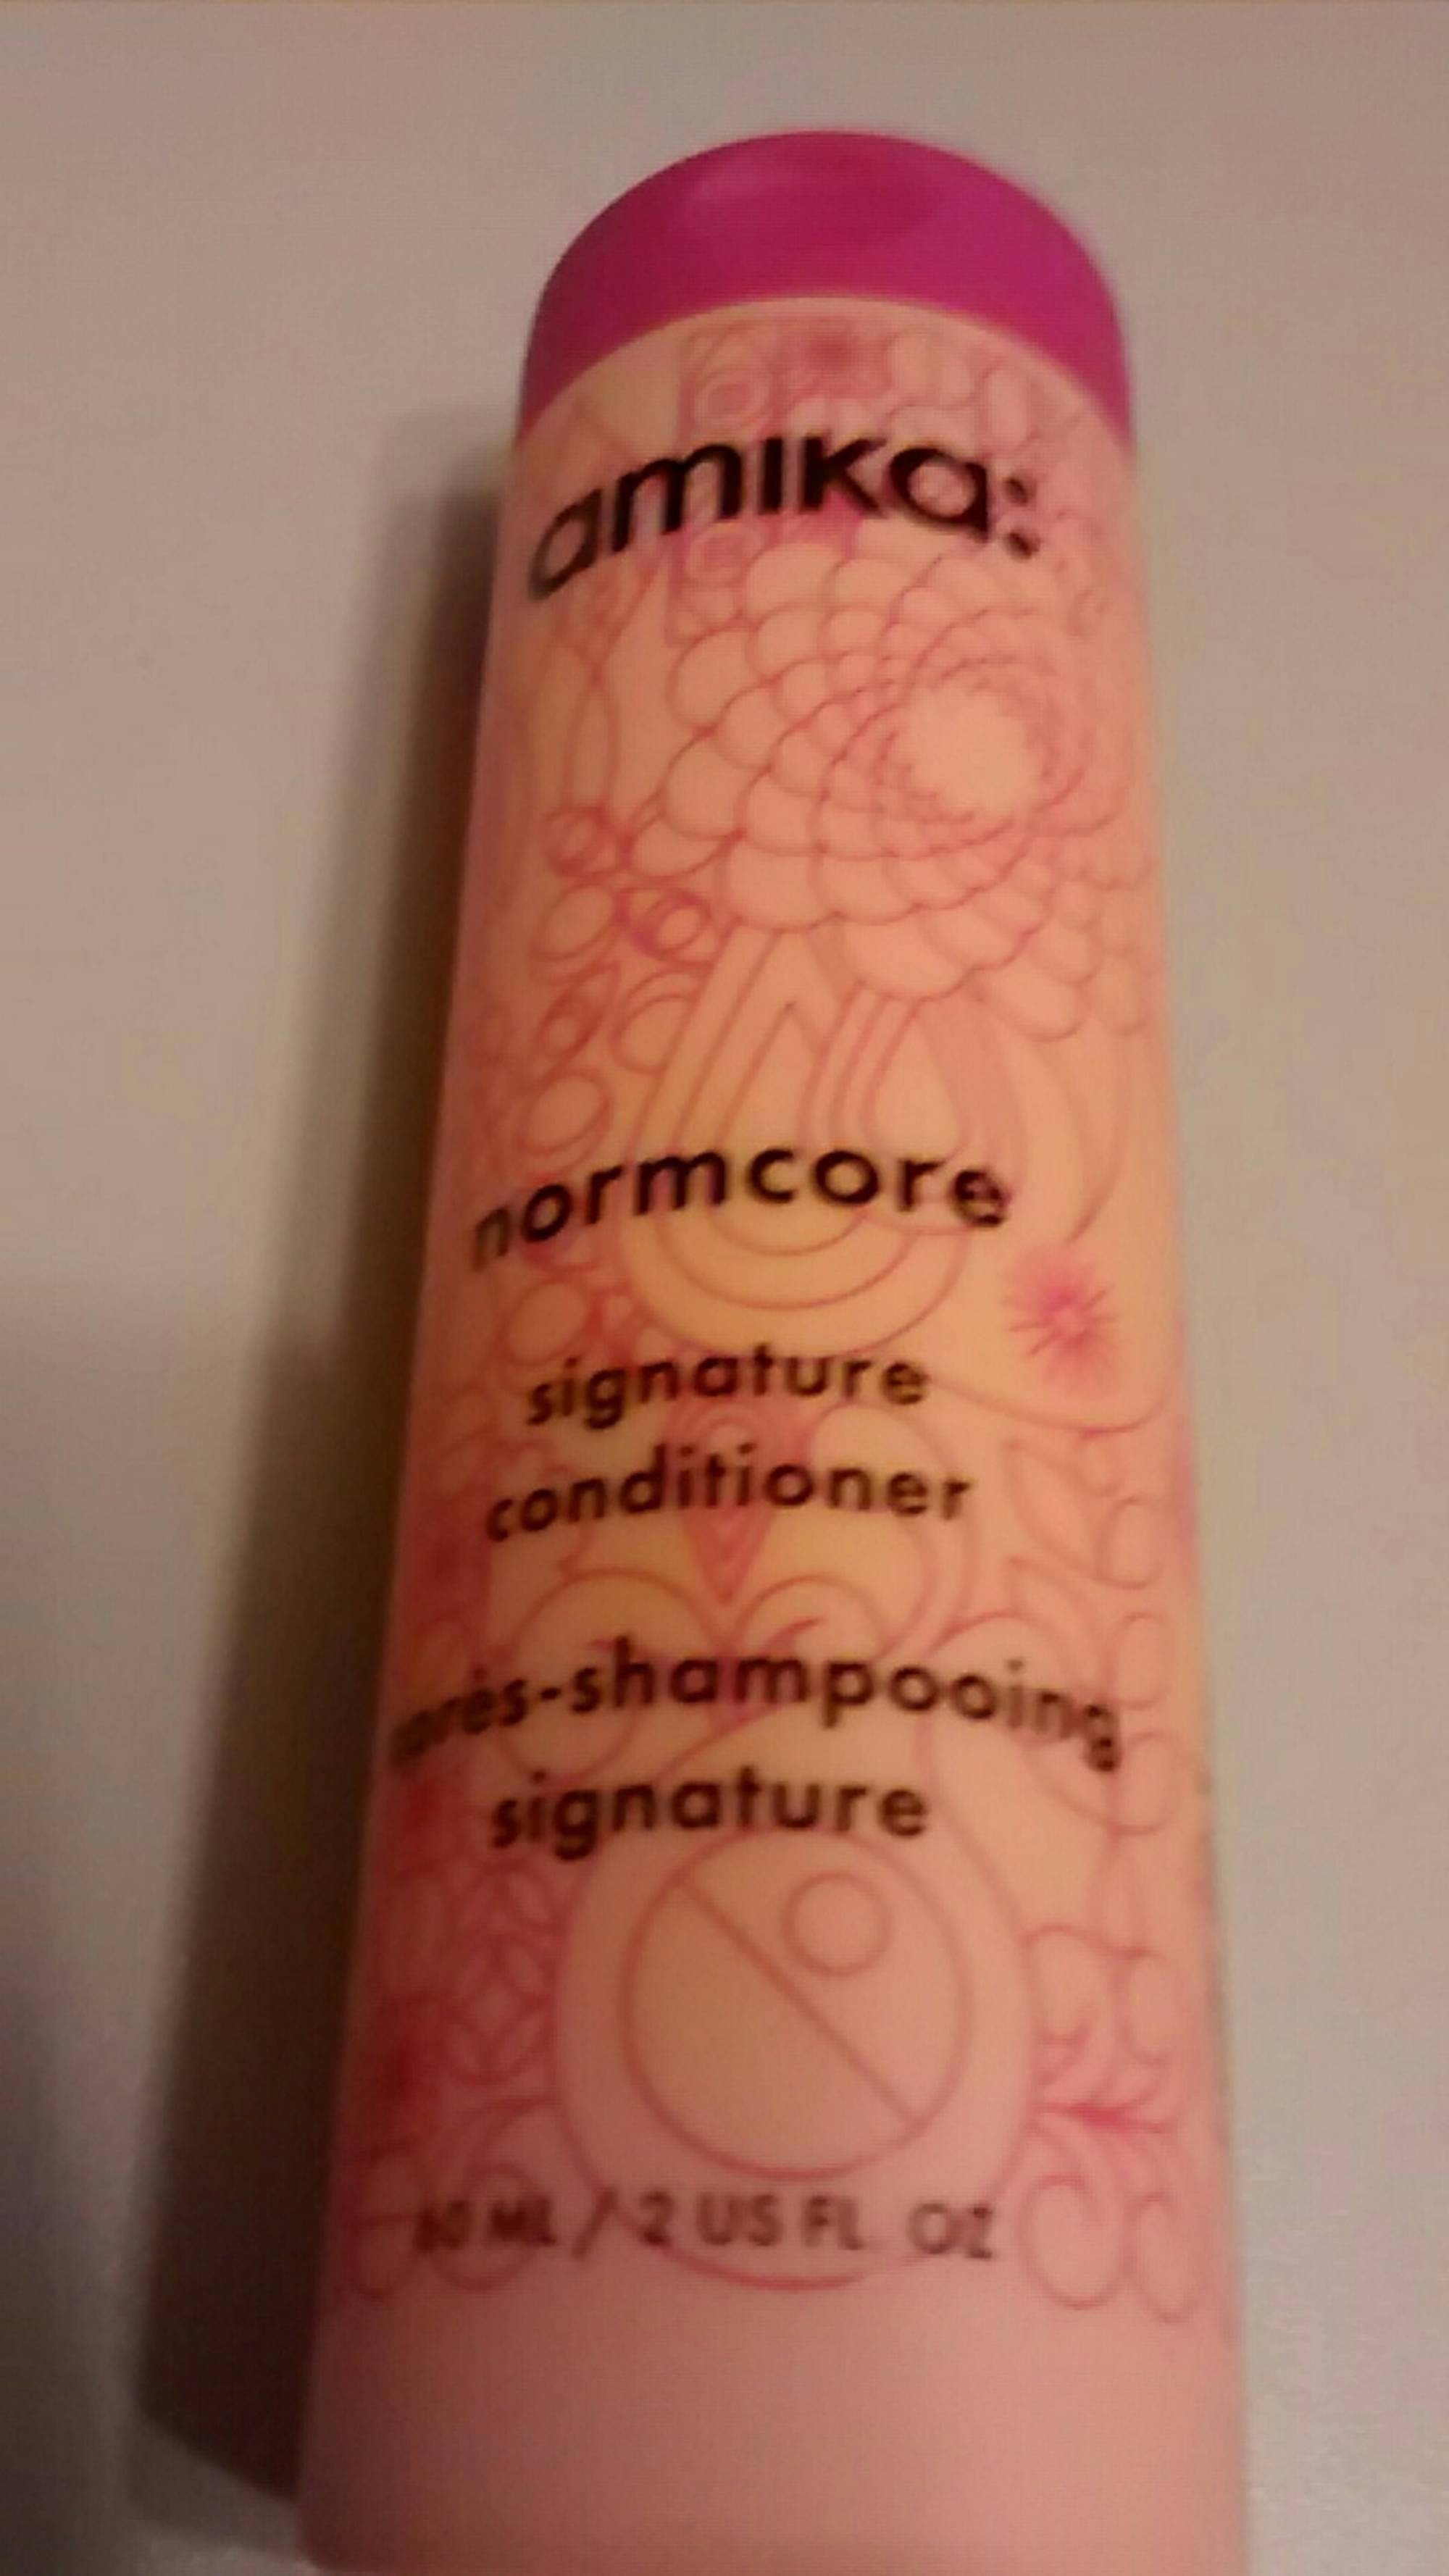 AMIKA - Normcore - Après-shampooing signature